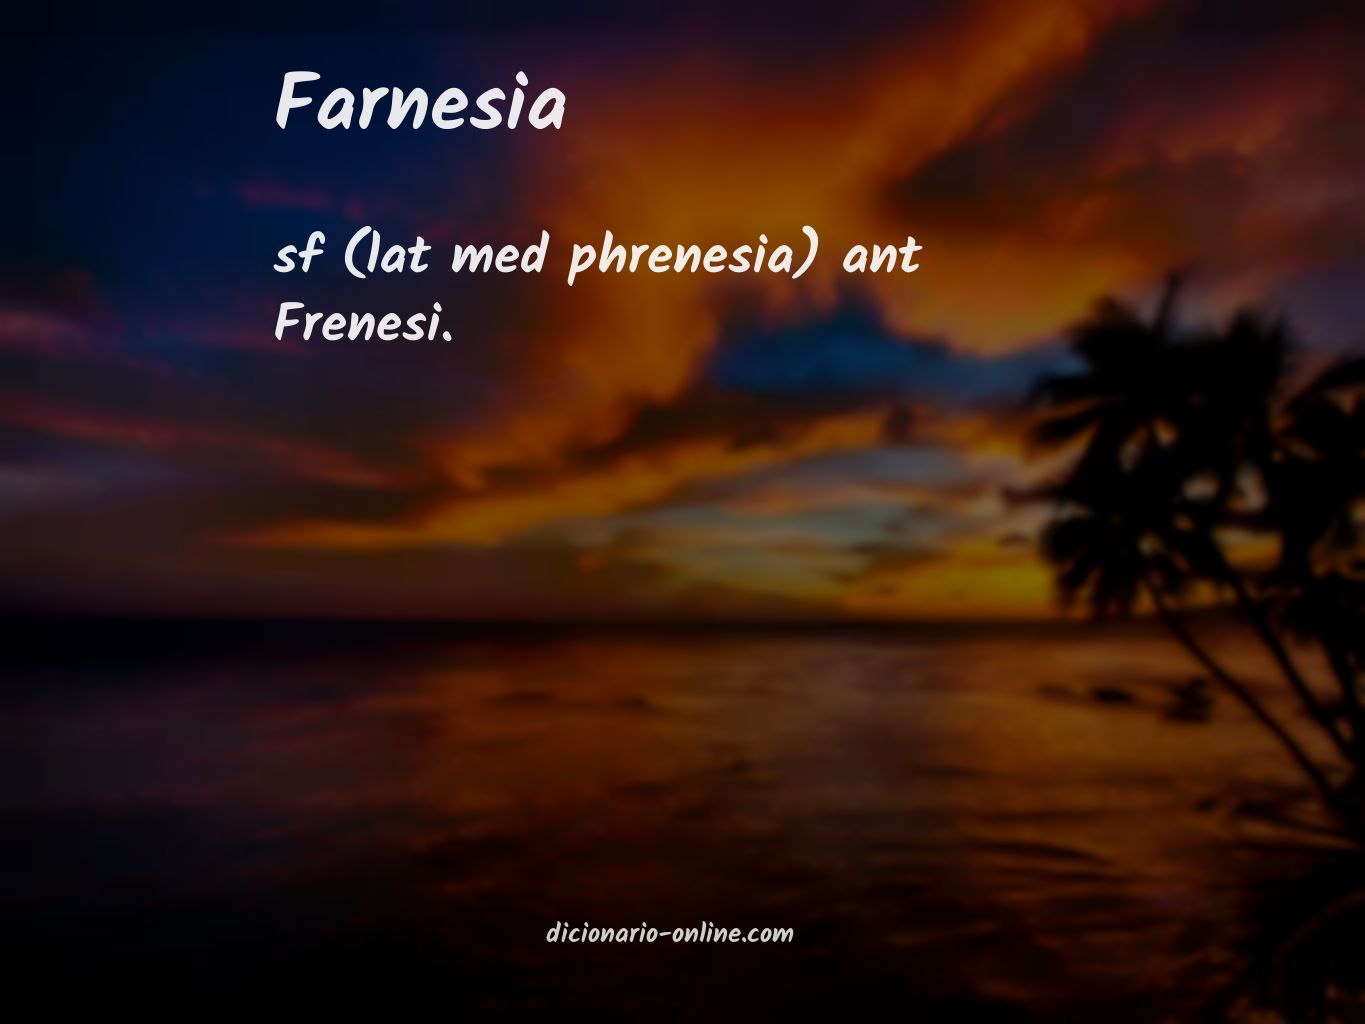 Significado de farnesia